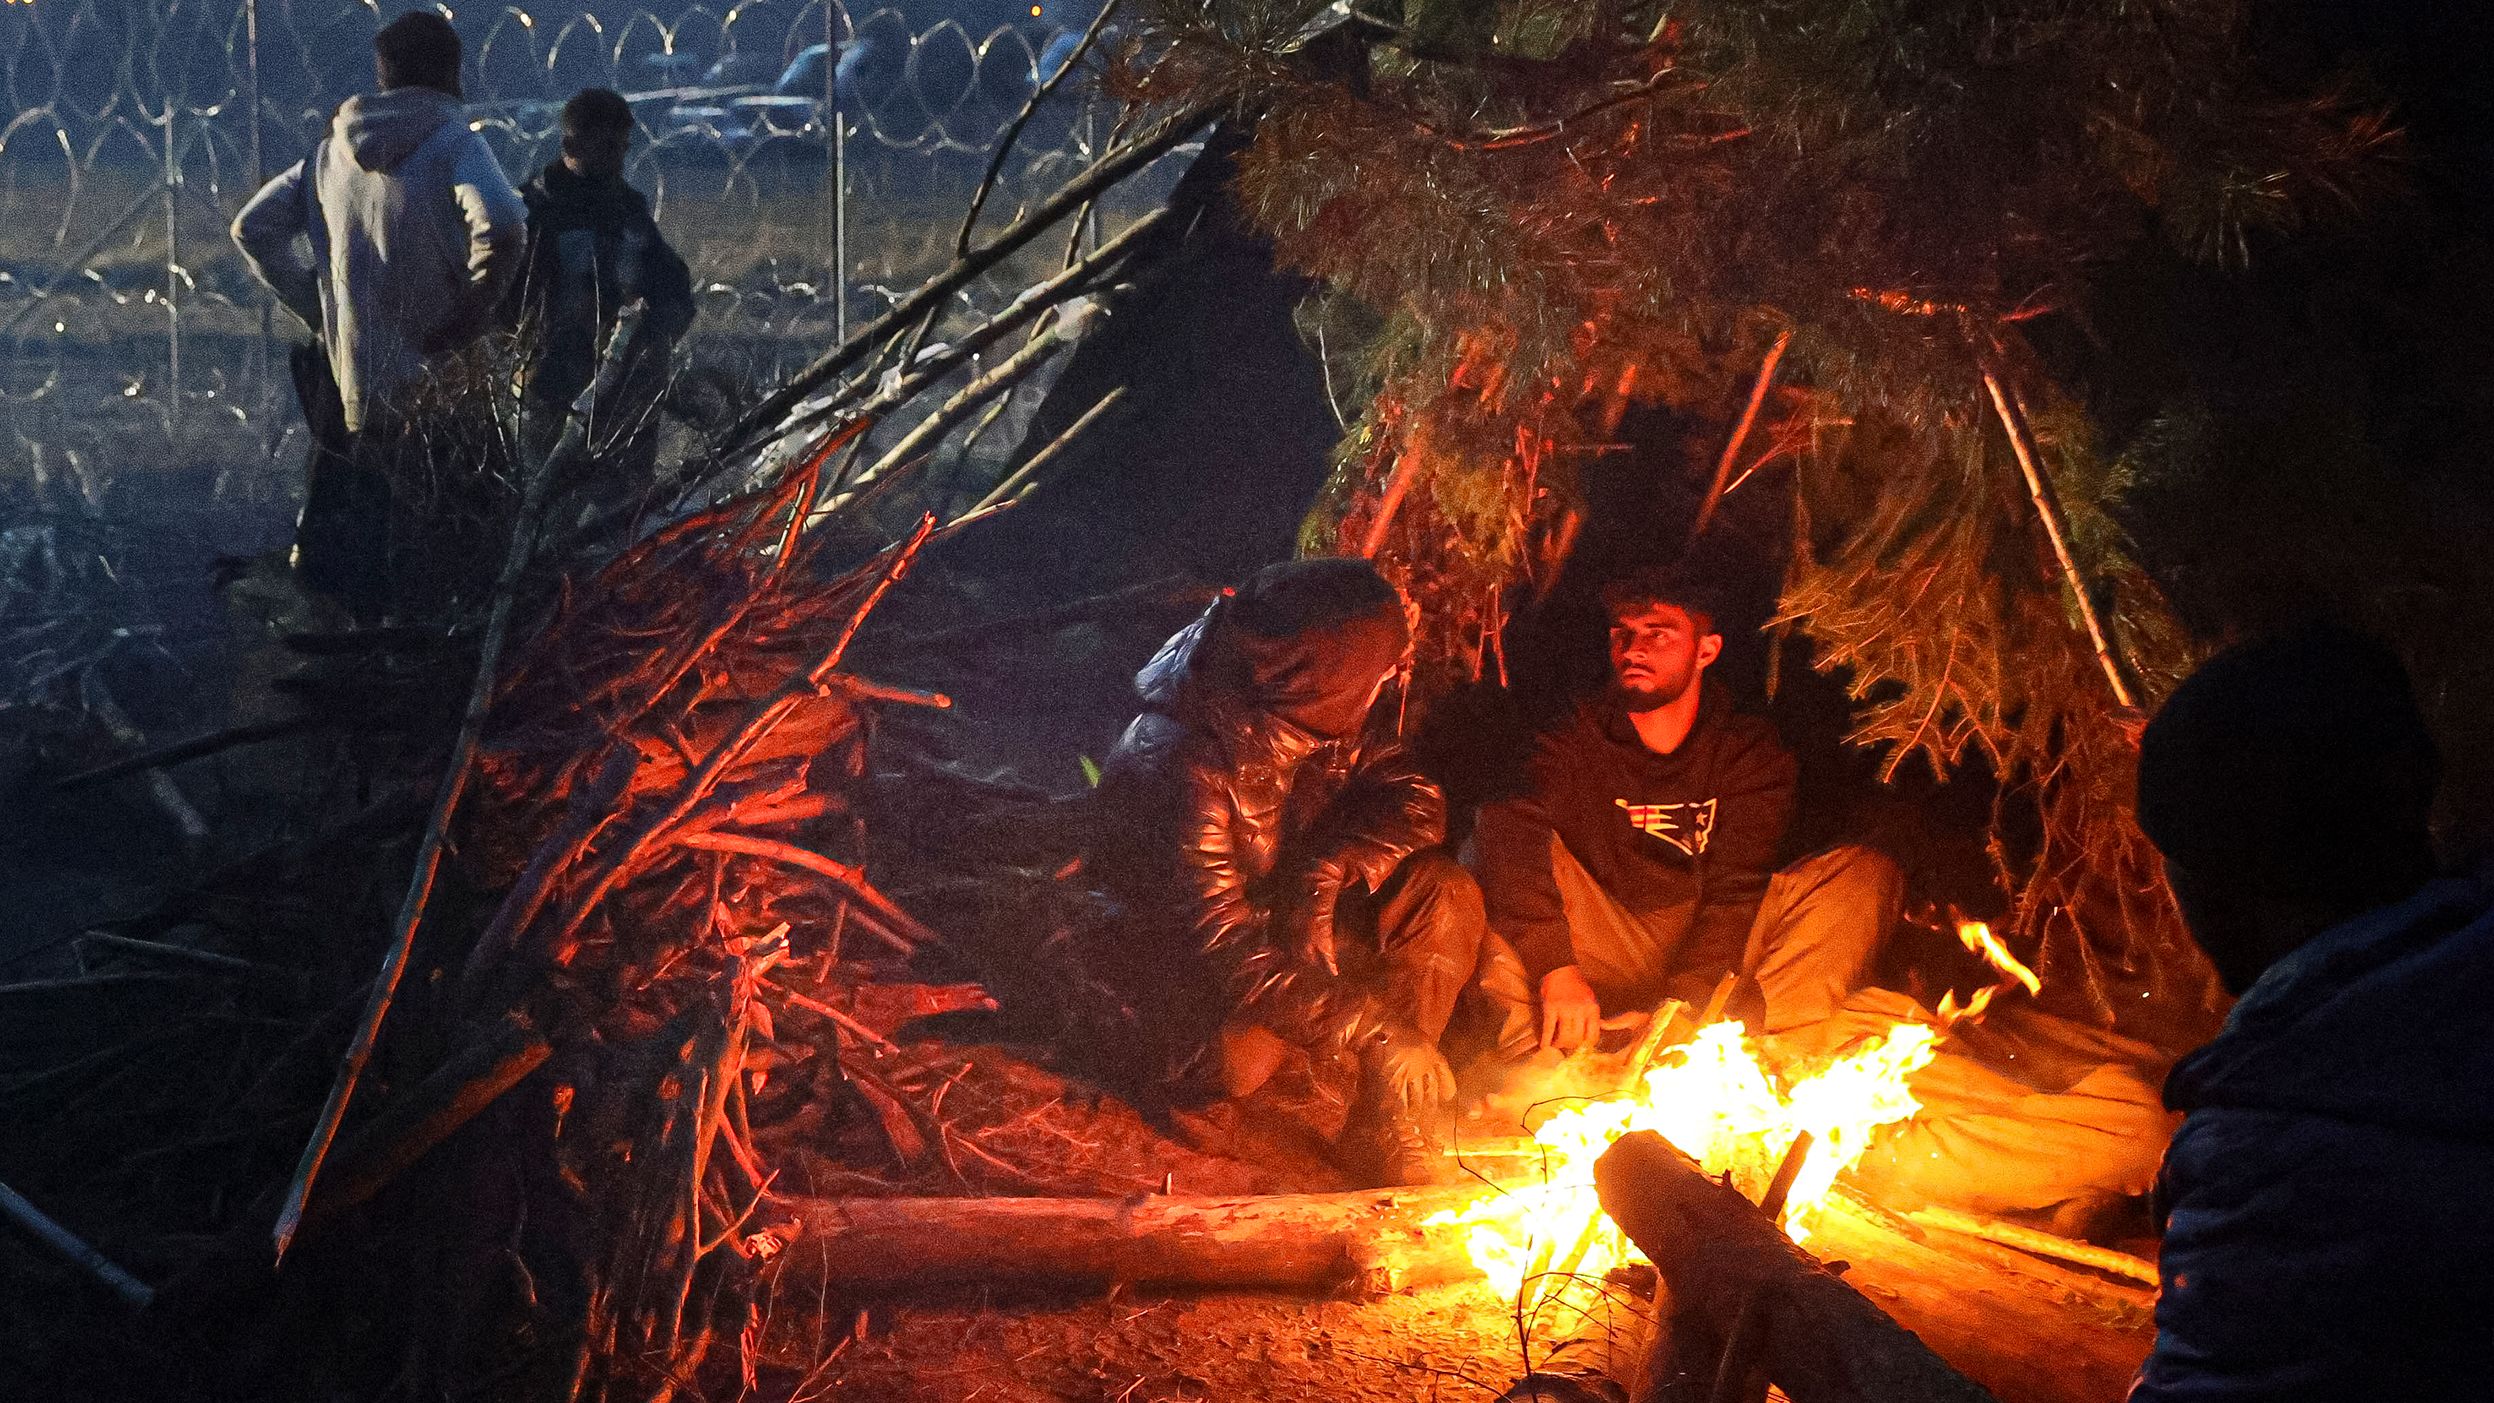 Migrants rest near a fire near the border on Wednesday, November 10.